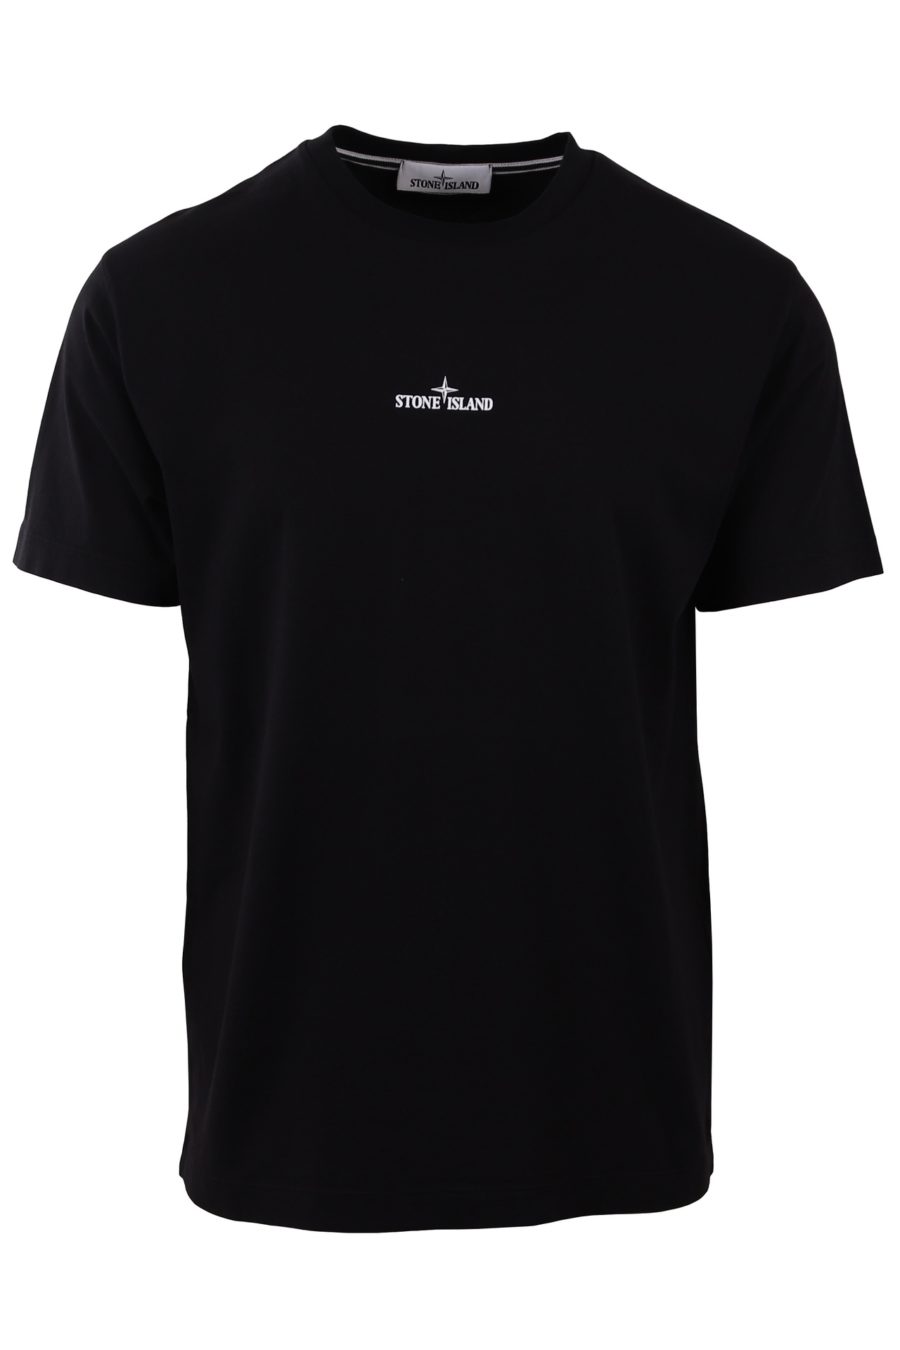 T-shirt Stone Island black with small logo - 484ec5245b02be6e1766d9ccbe2ce30e5fd79b44